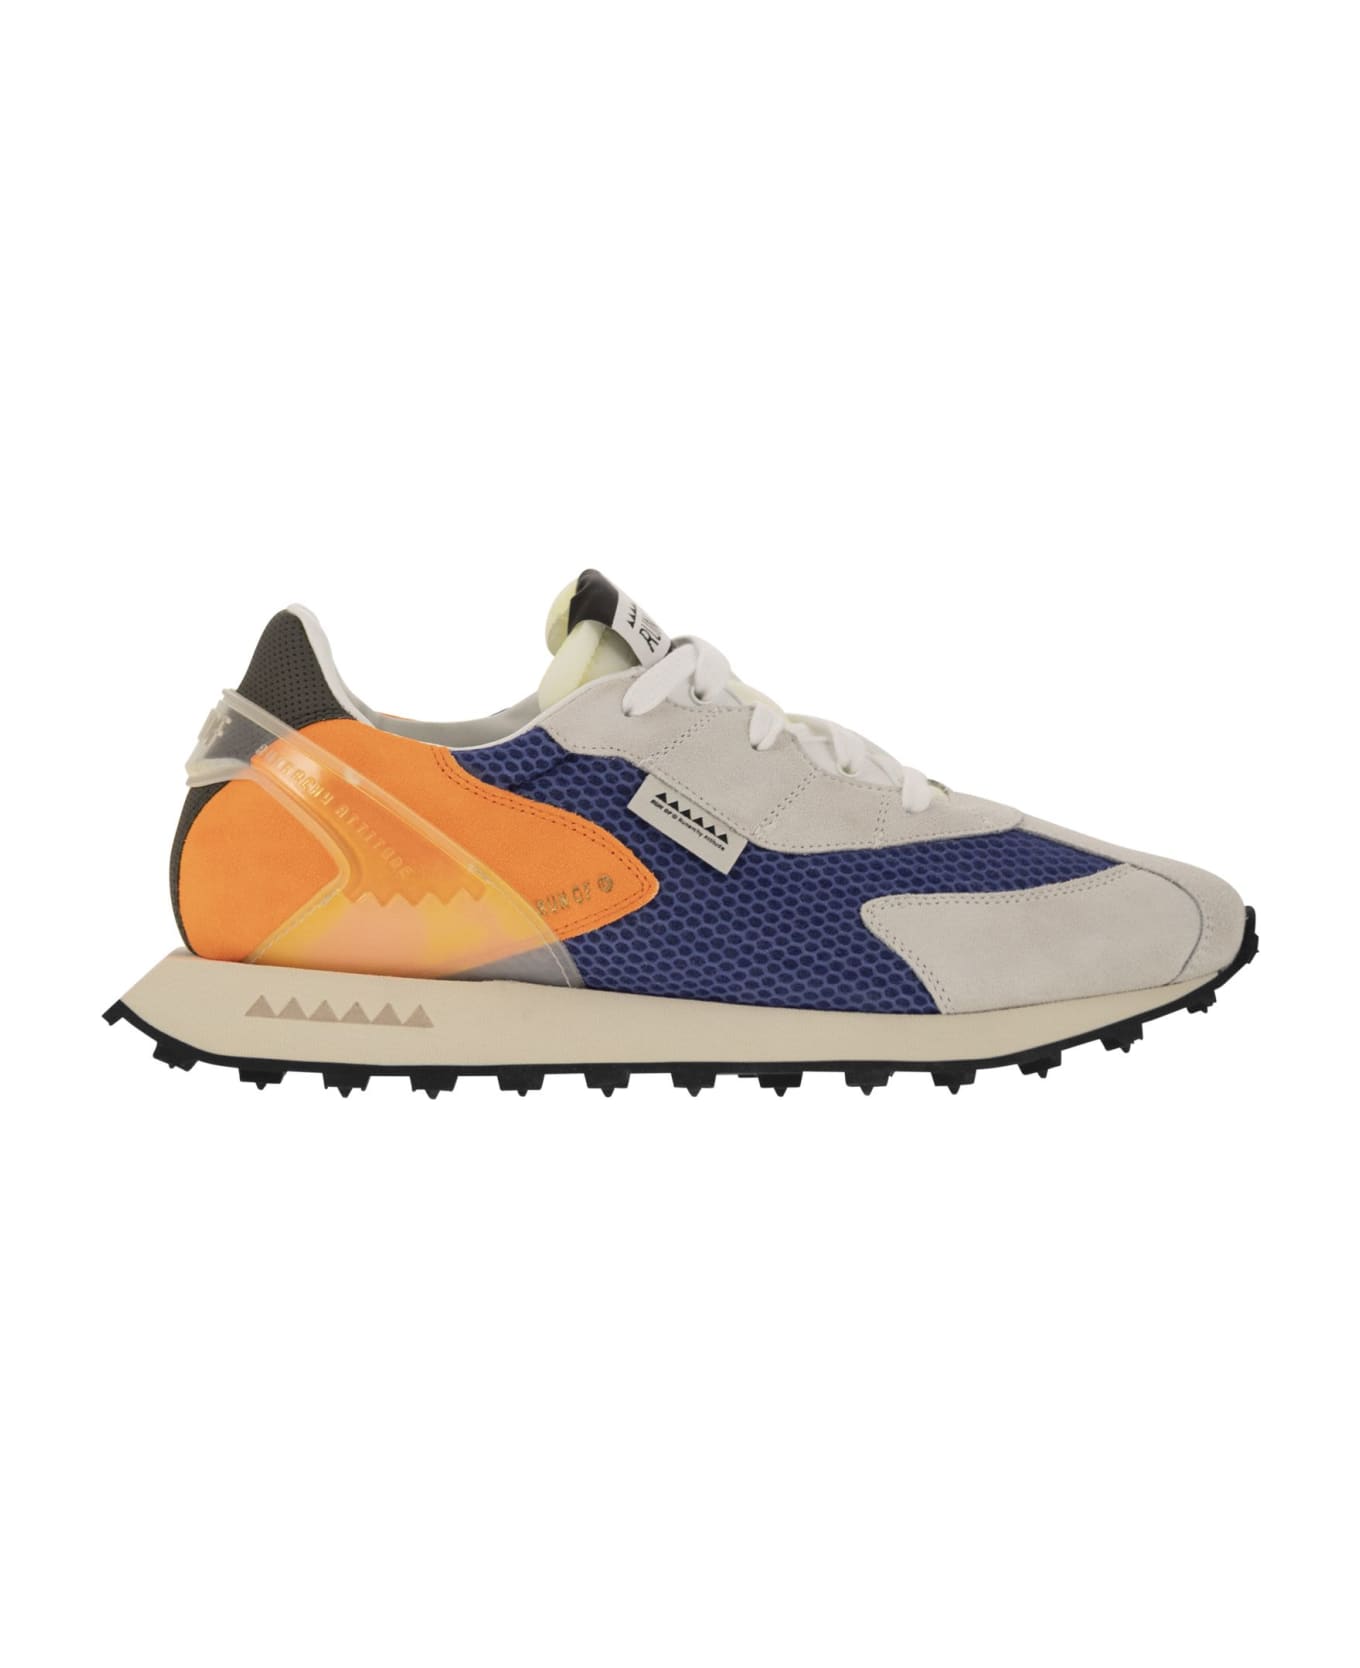 RUN OF Piuma - Sneakers - Blu/orange スニーカー